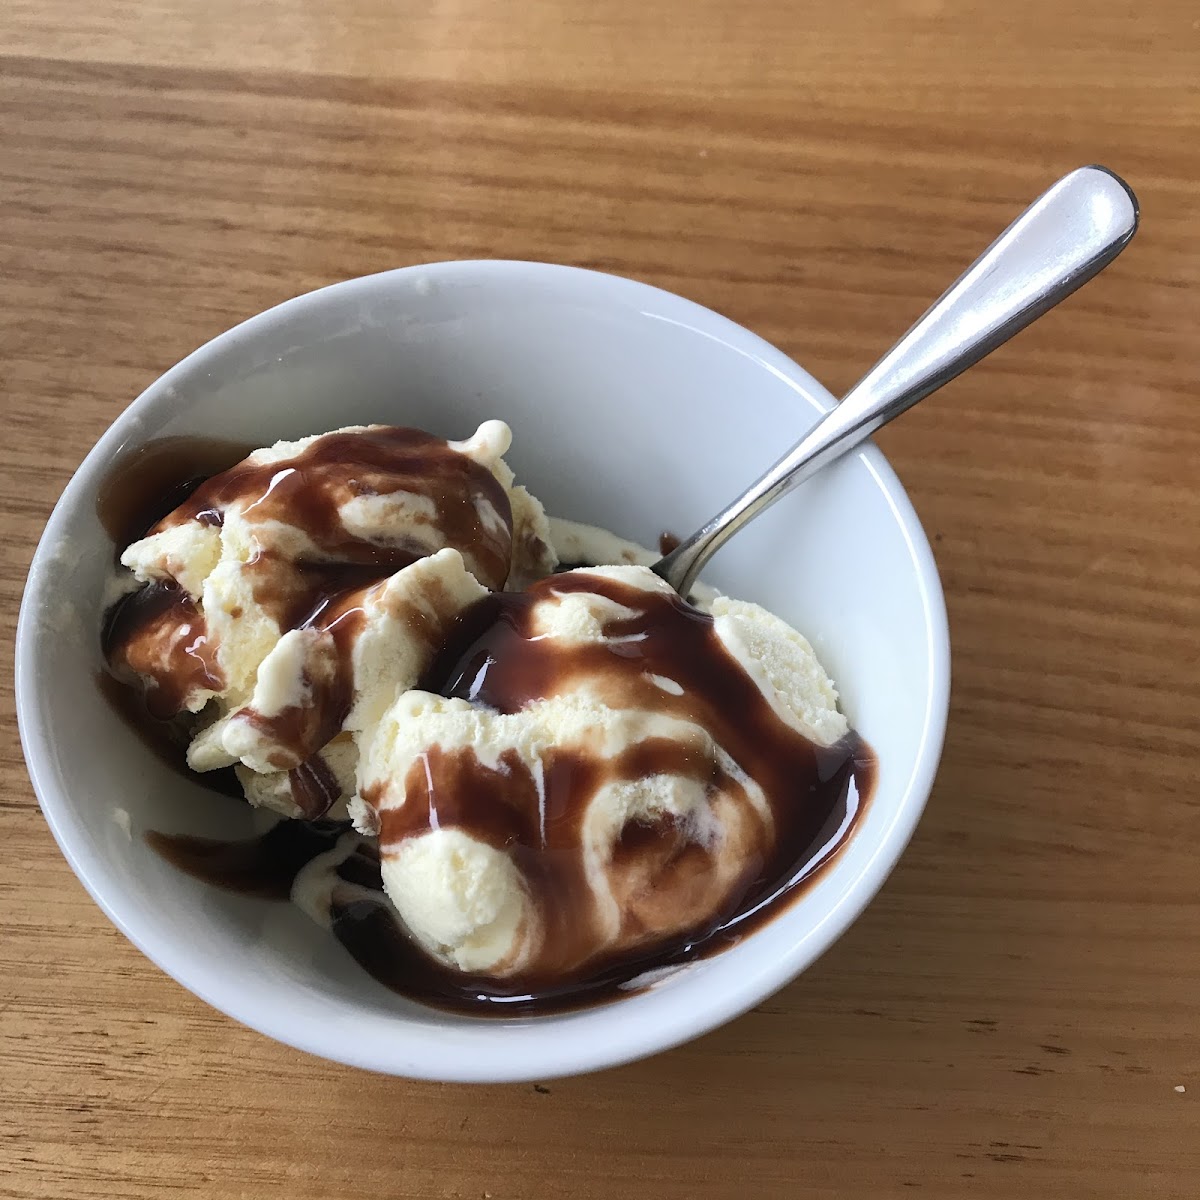 Vanilla ice cream with chocolate topping